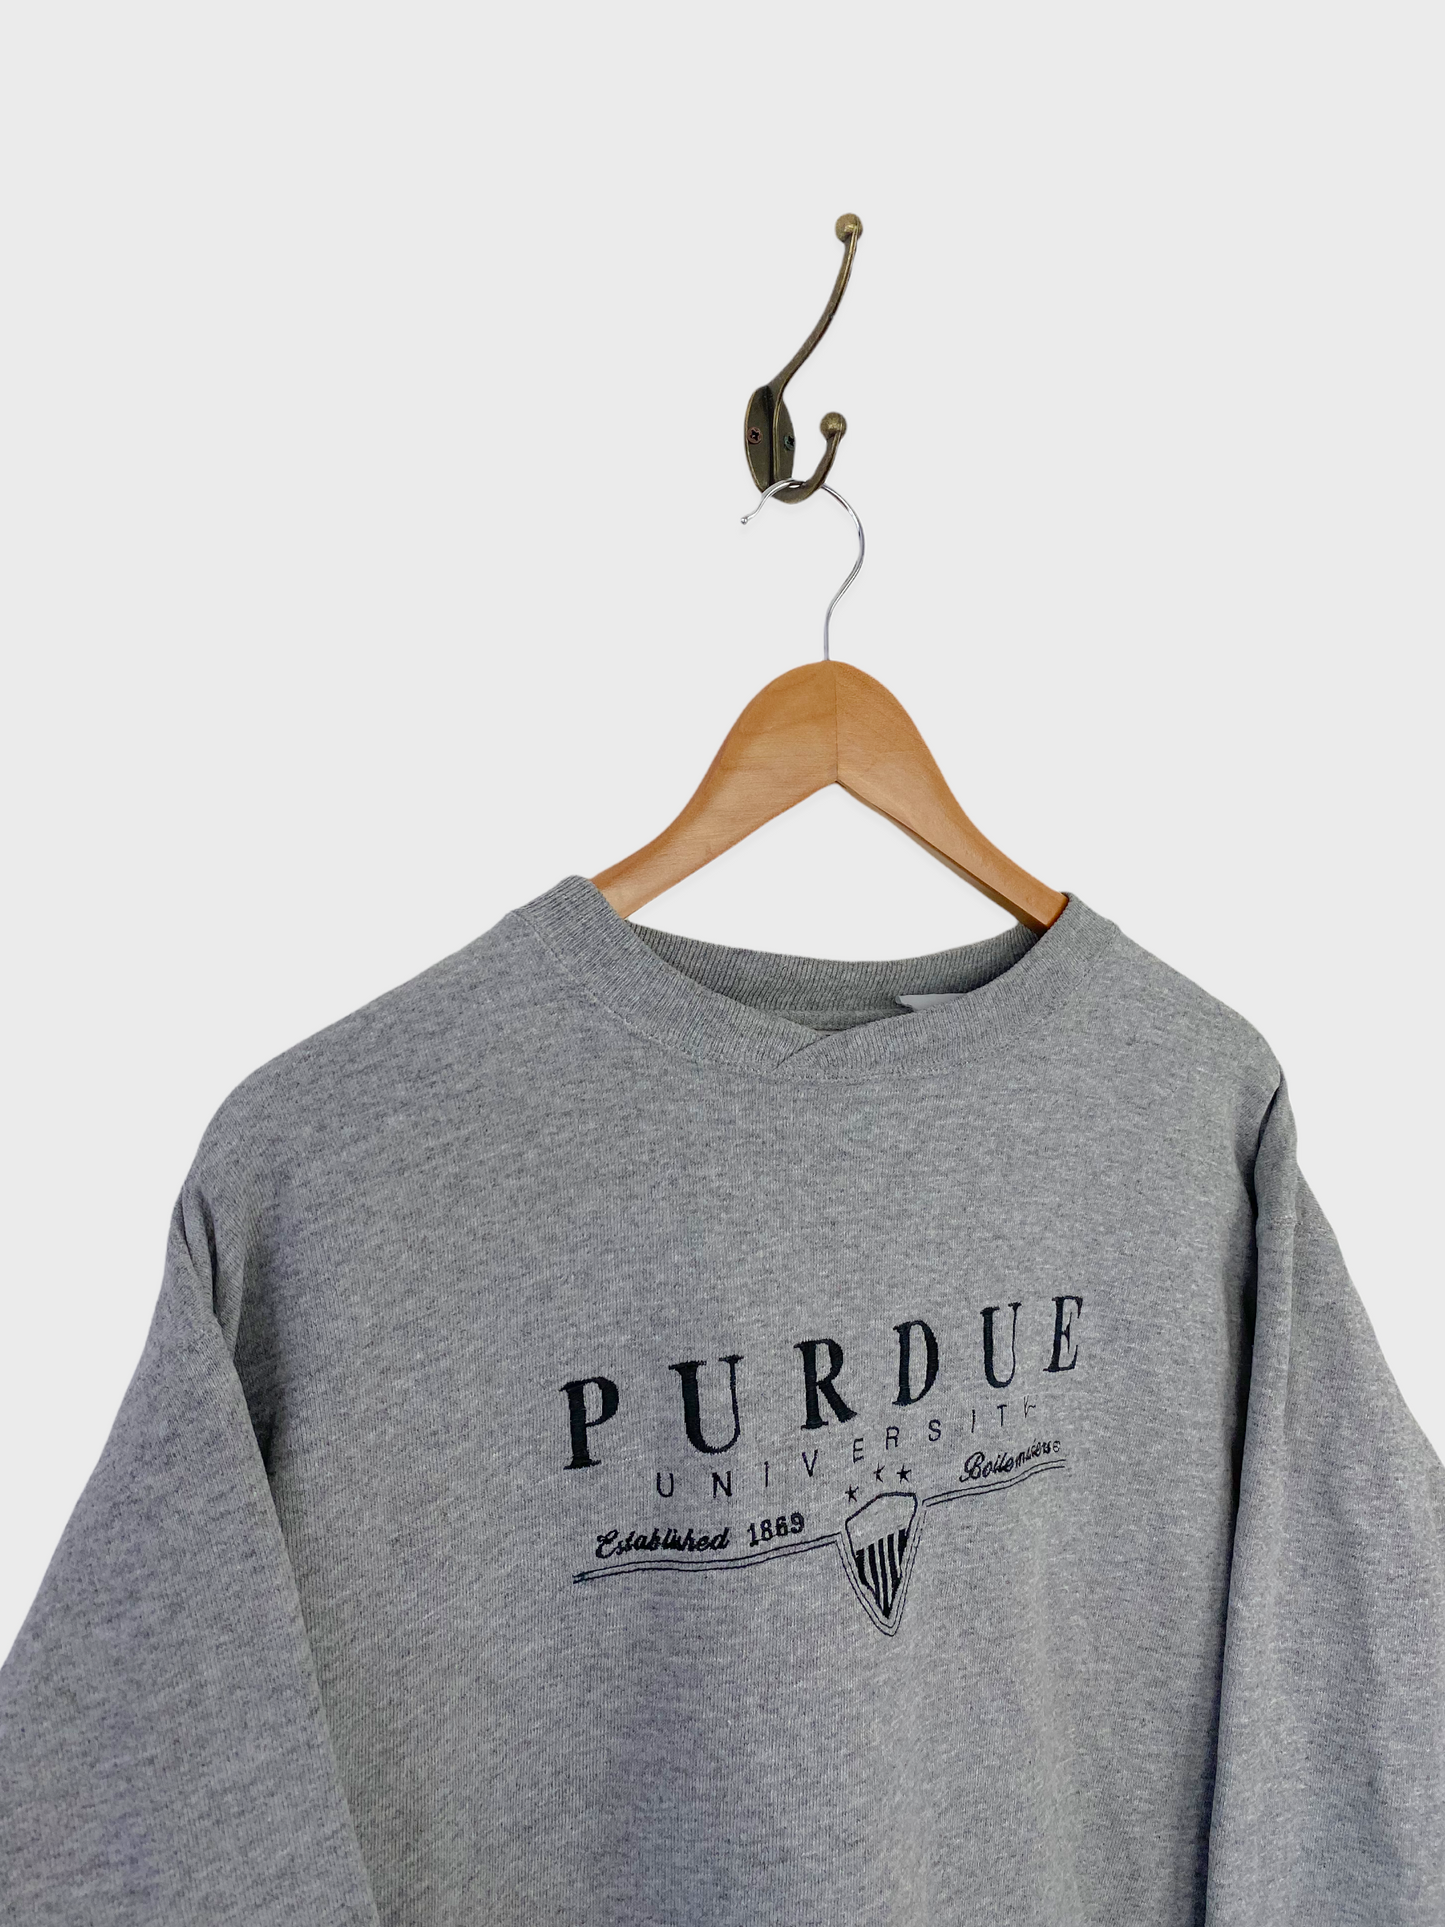 90's Purdue Boilermakers Embroidered Vintage Sweatshirt Size 12